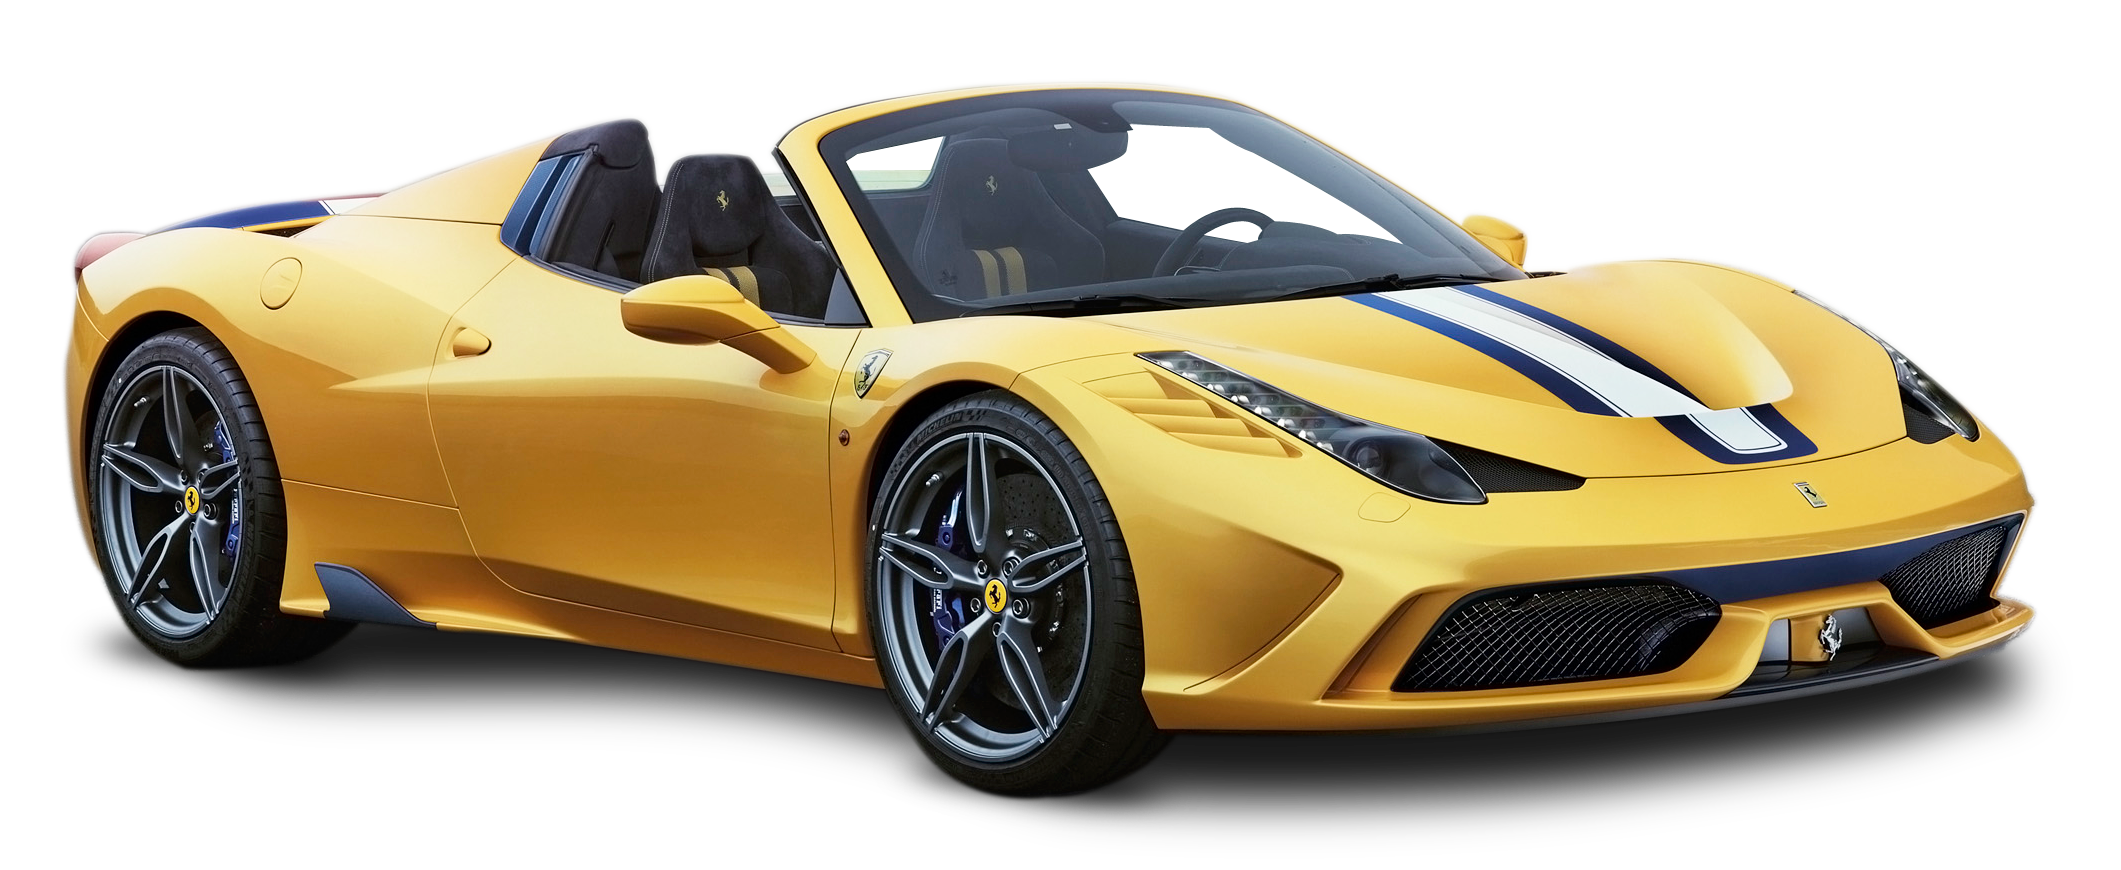 yellow ferrari speciale car png image pngpix #22862